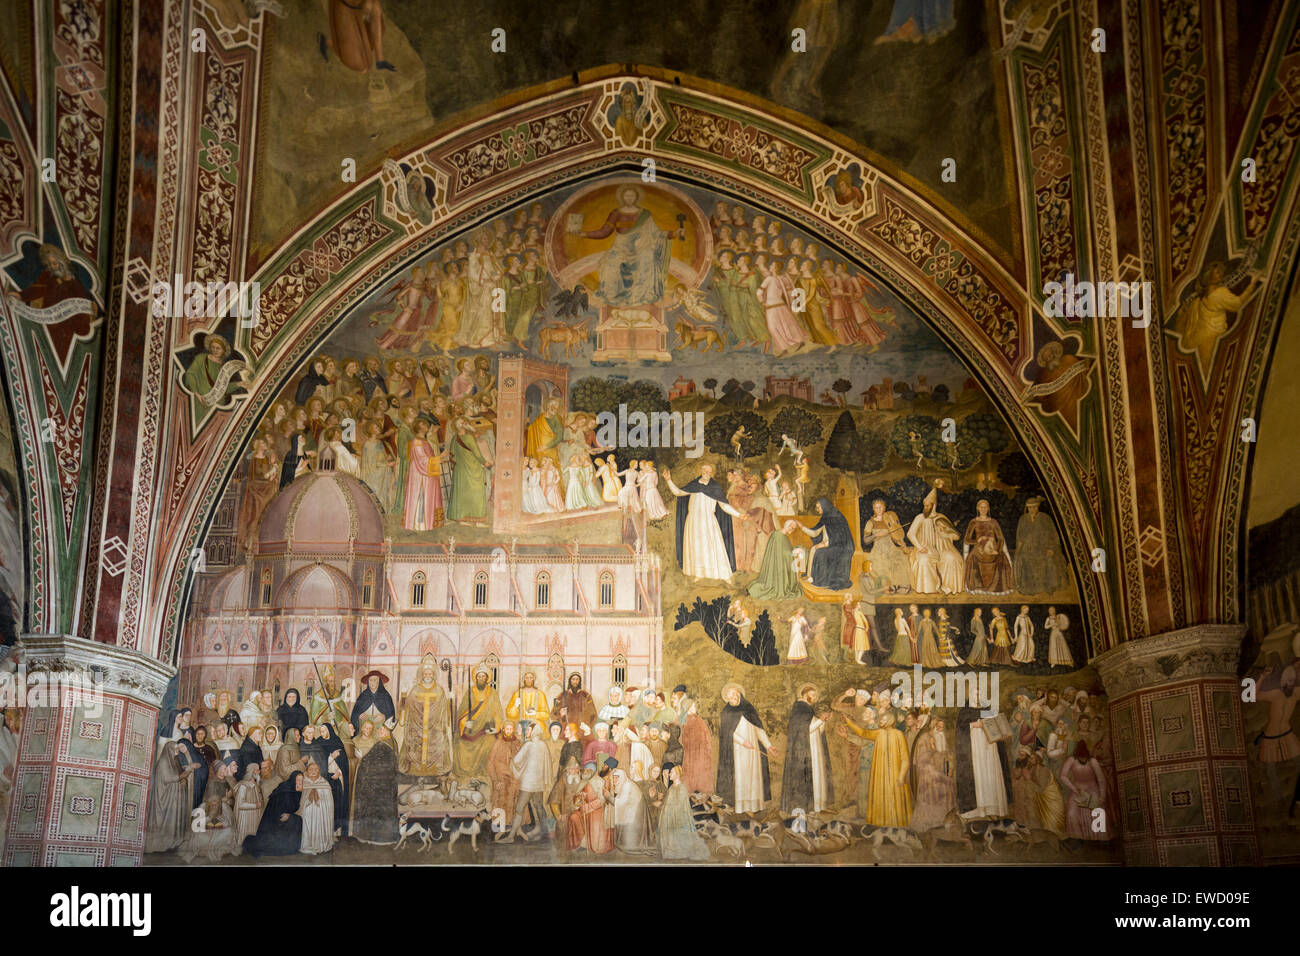 The triumph of the church, Spanish Chapel, Santa Maria Novella, Florence, Italy Stock Photo